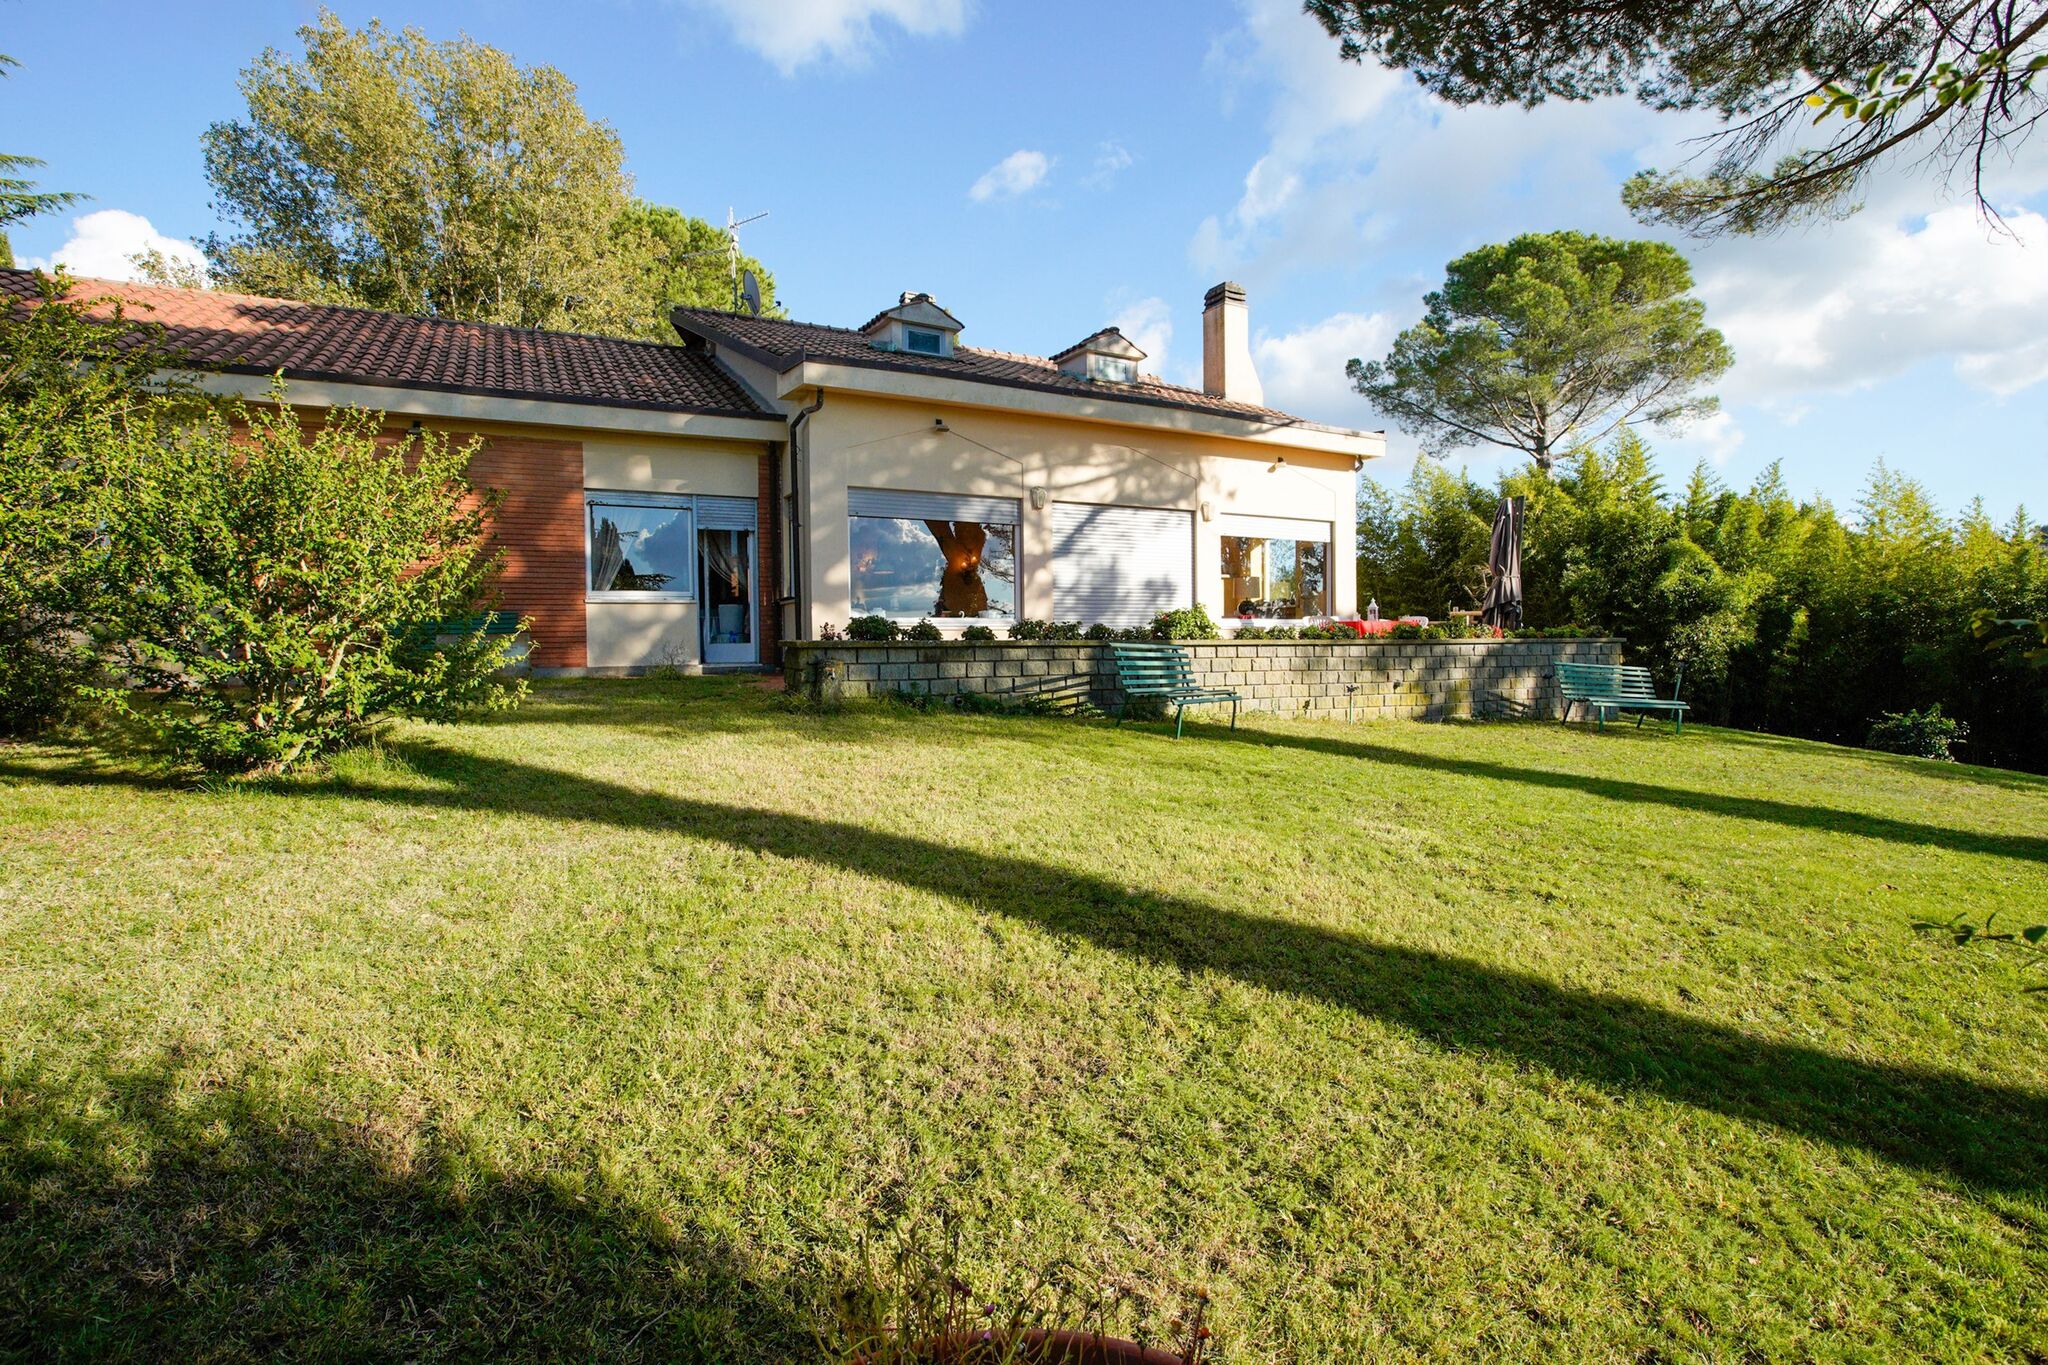 Exquisite Villa in Montefiascone with Garden